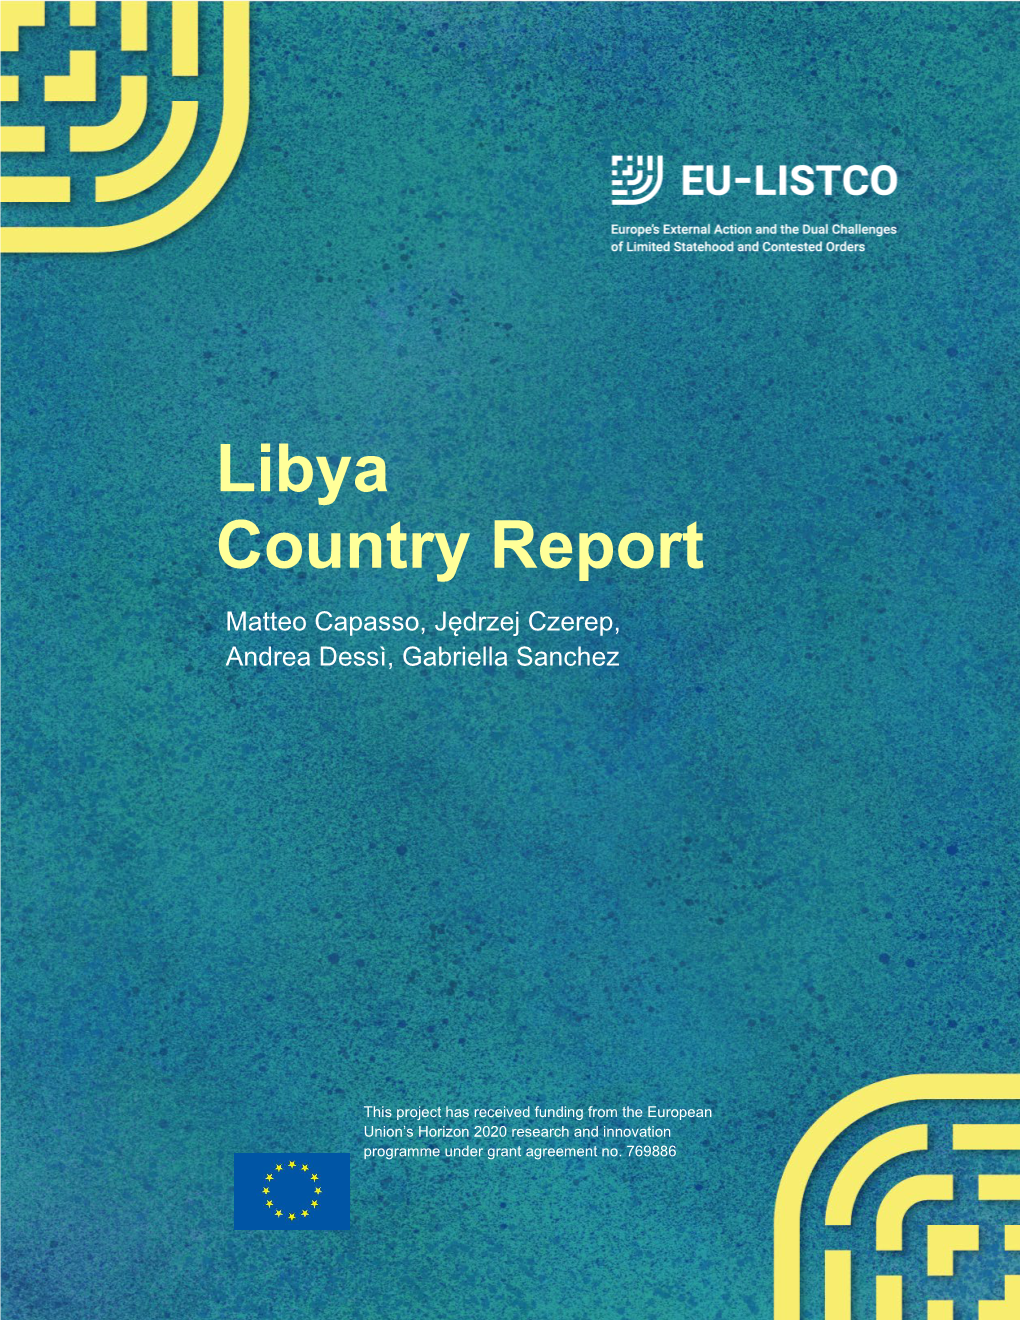 Libya Country Report Matteo Capasso, Jędrzej Czerep, Andrea Dessì, Gabriella Sanchez